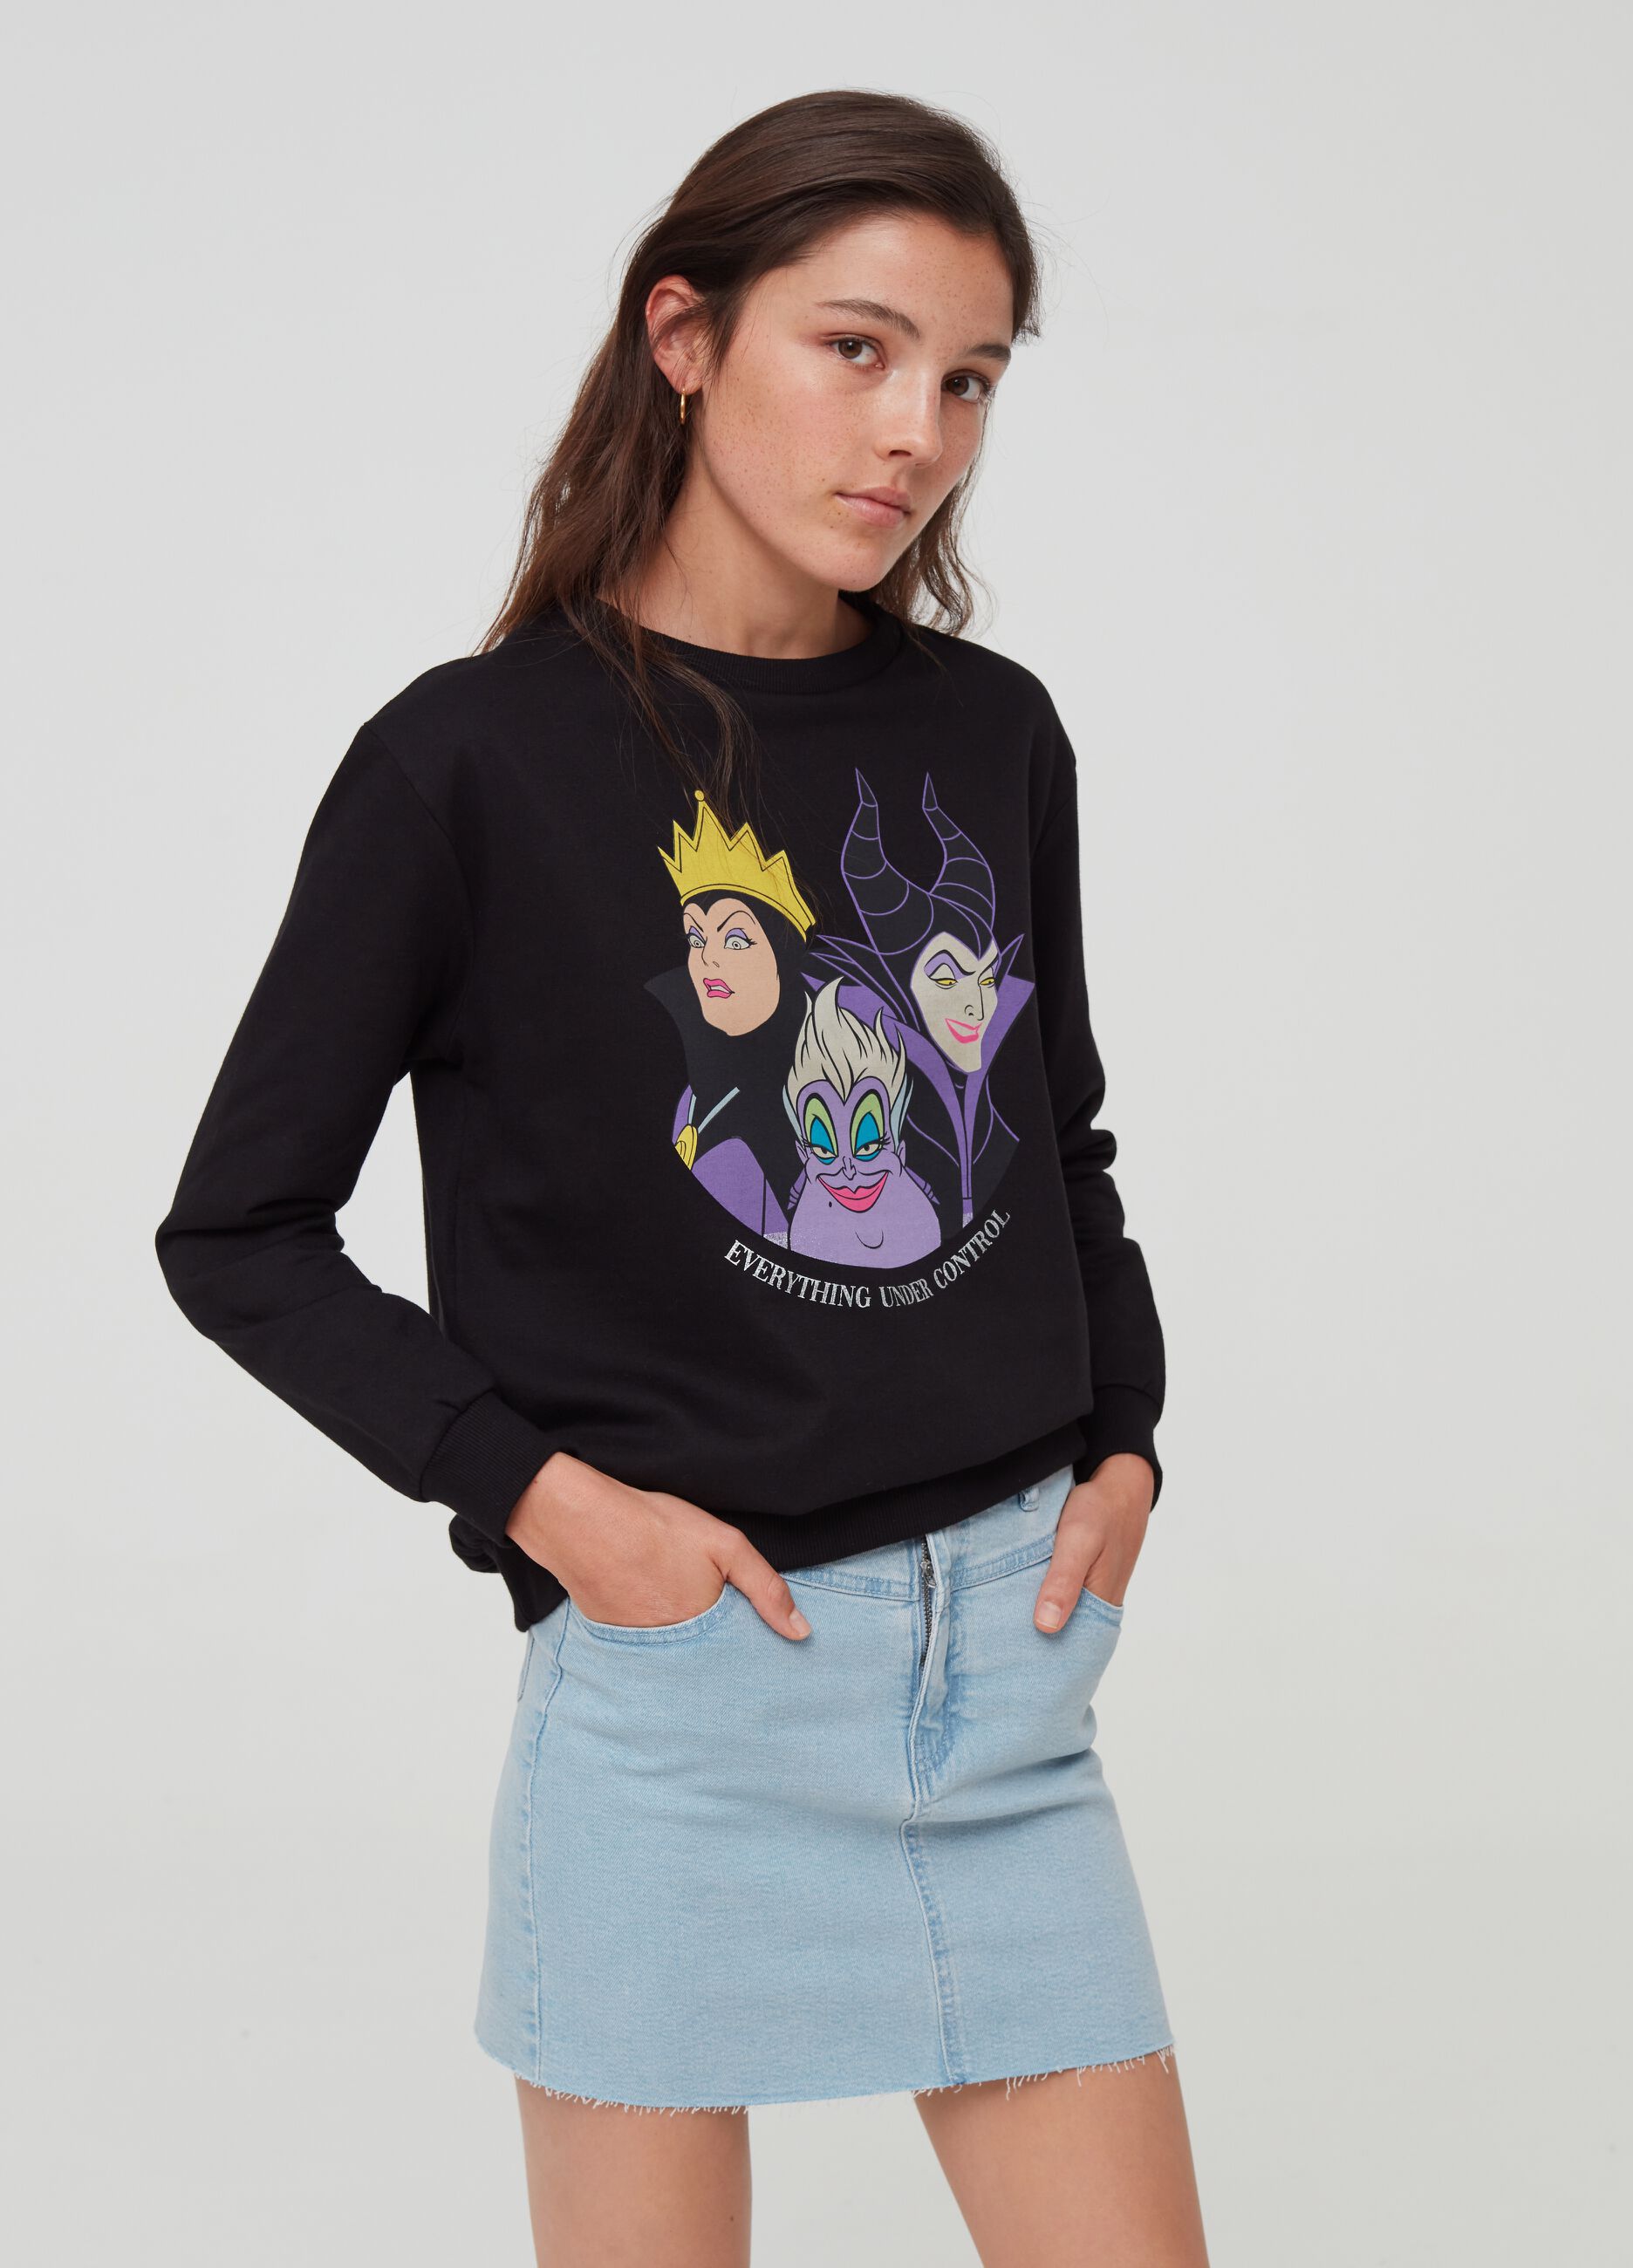 100% cotton sweatshirt with Disney witches